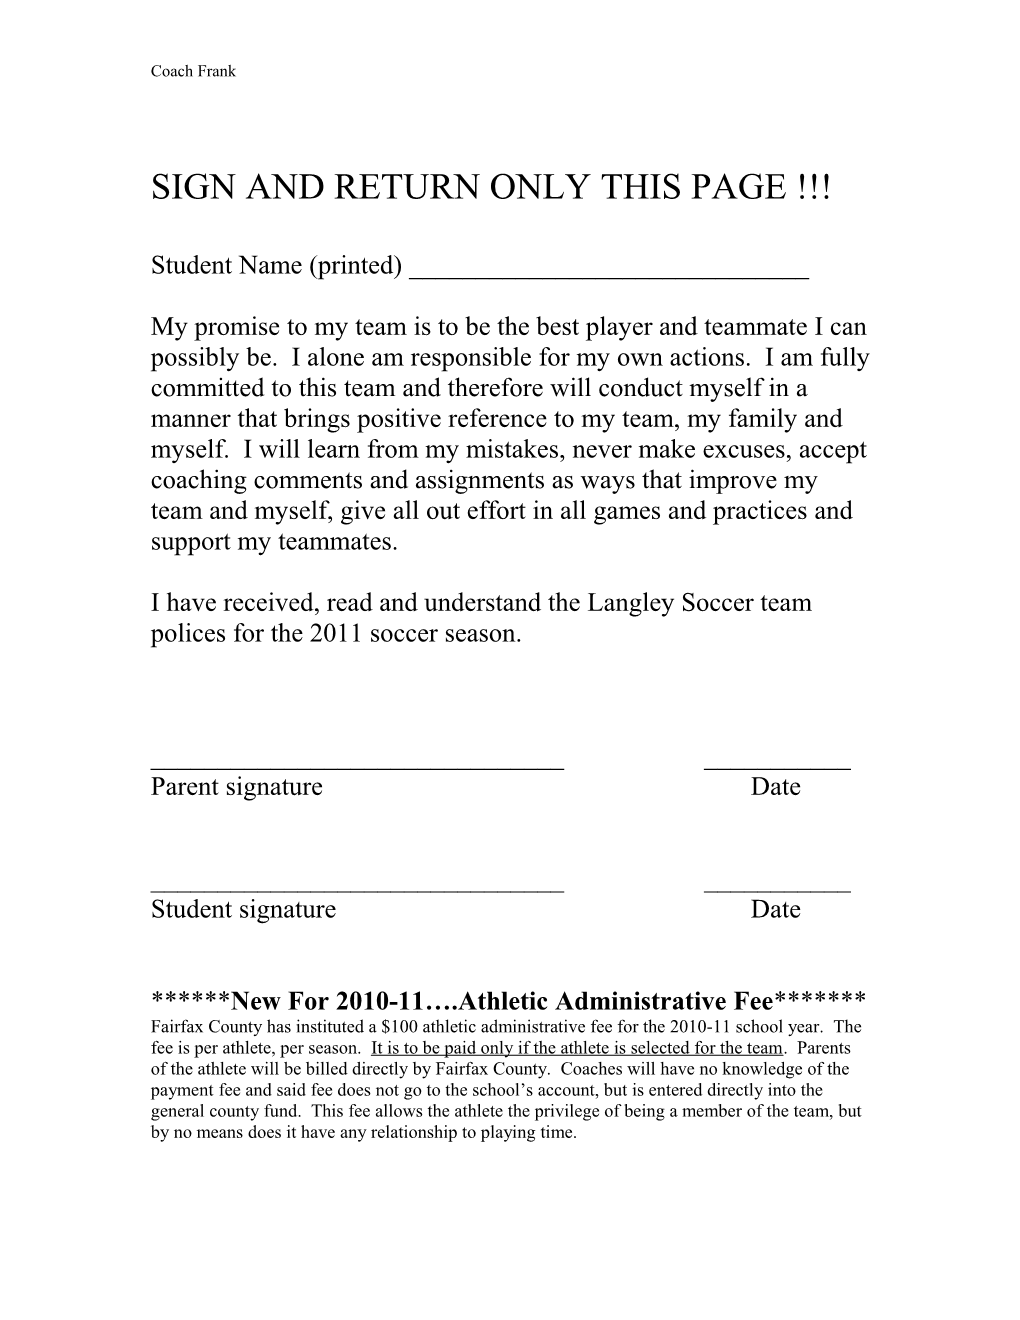 Langley Saxons Soccer Team Policies